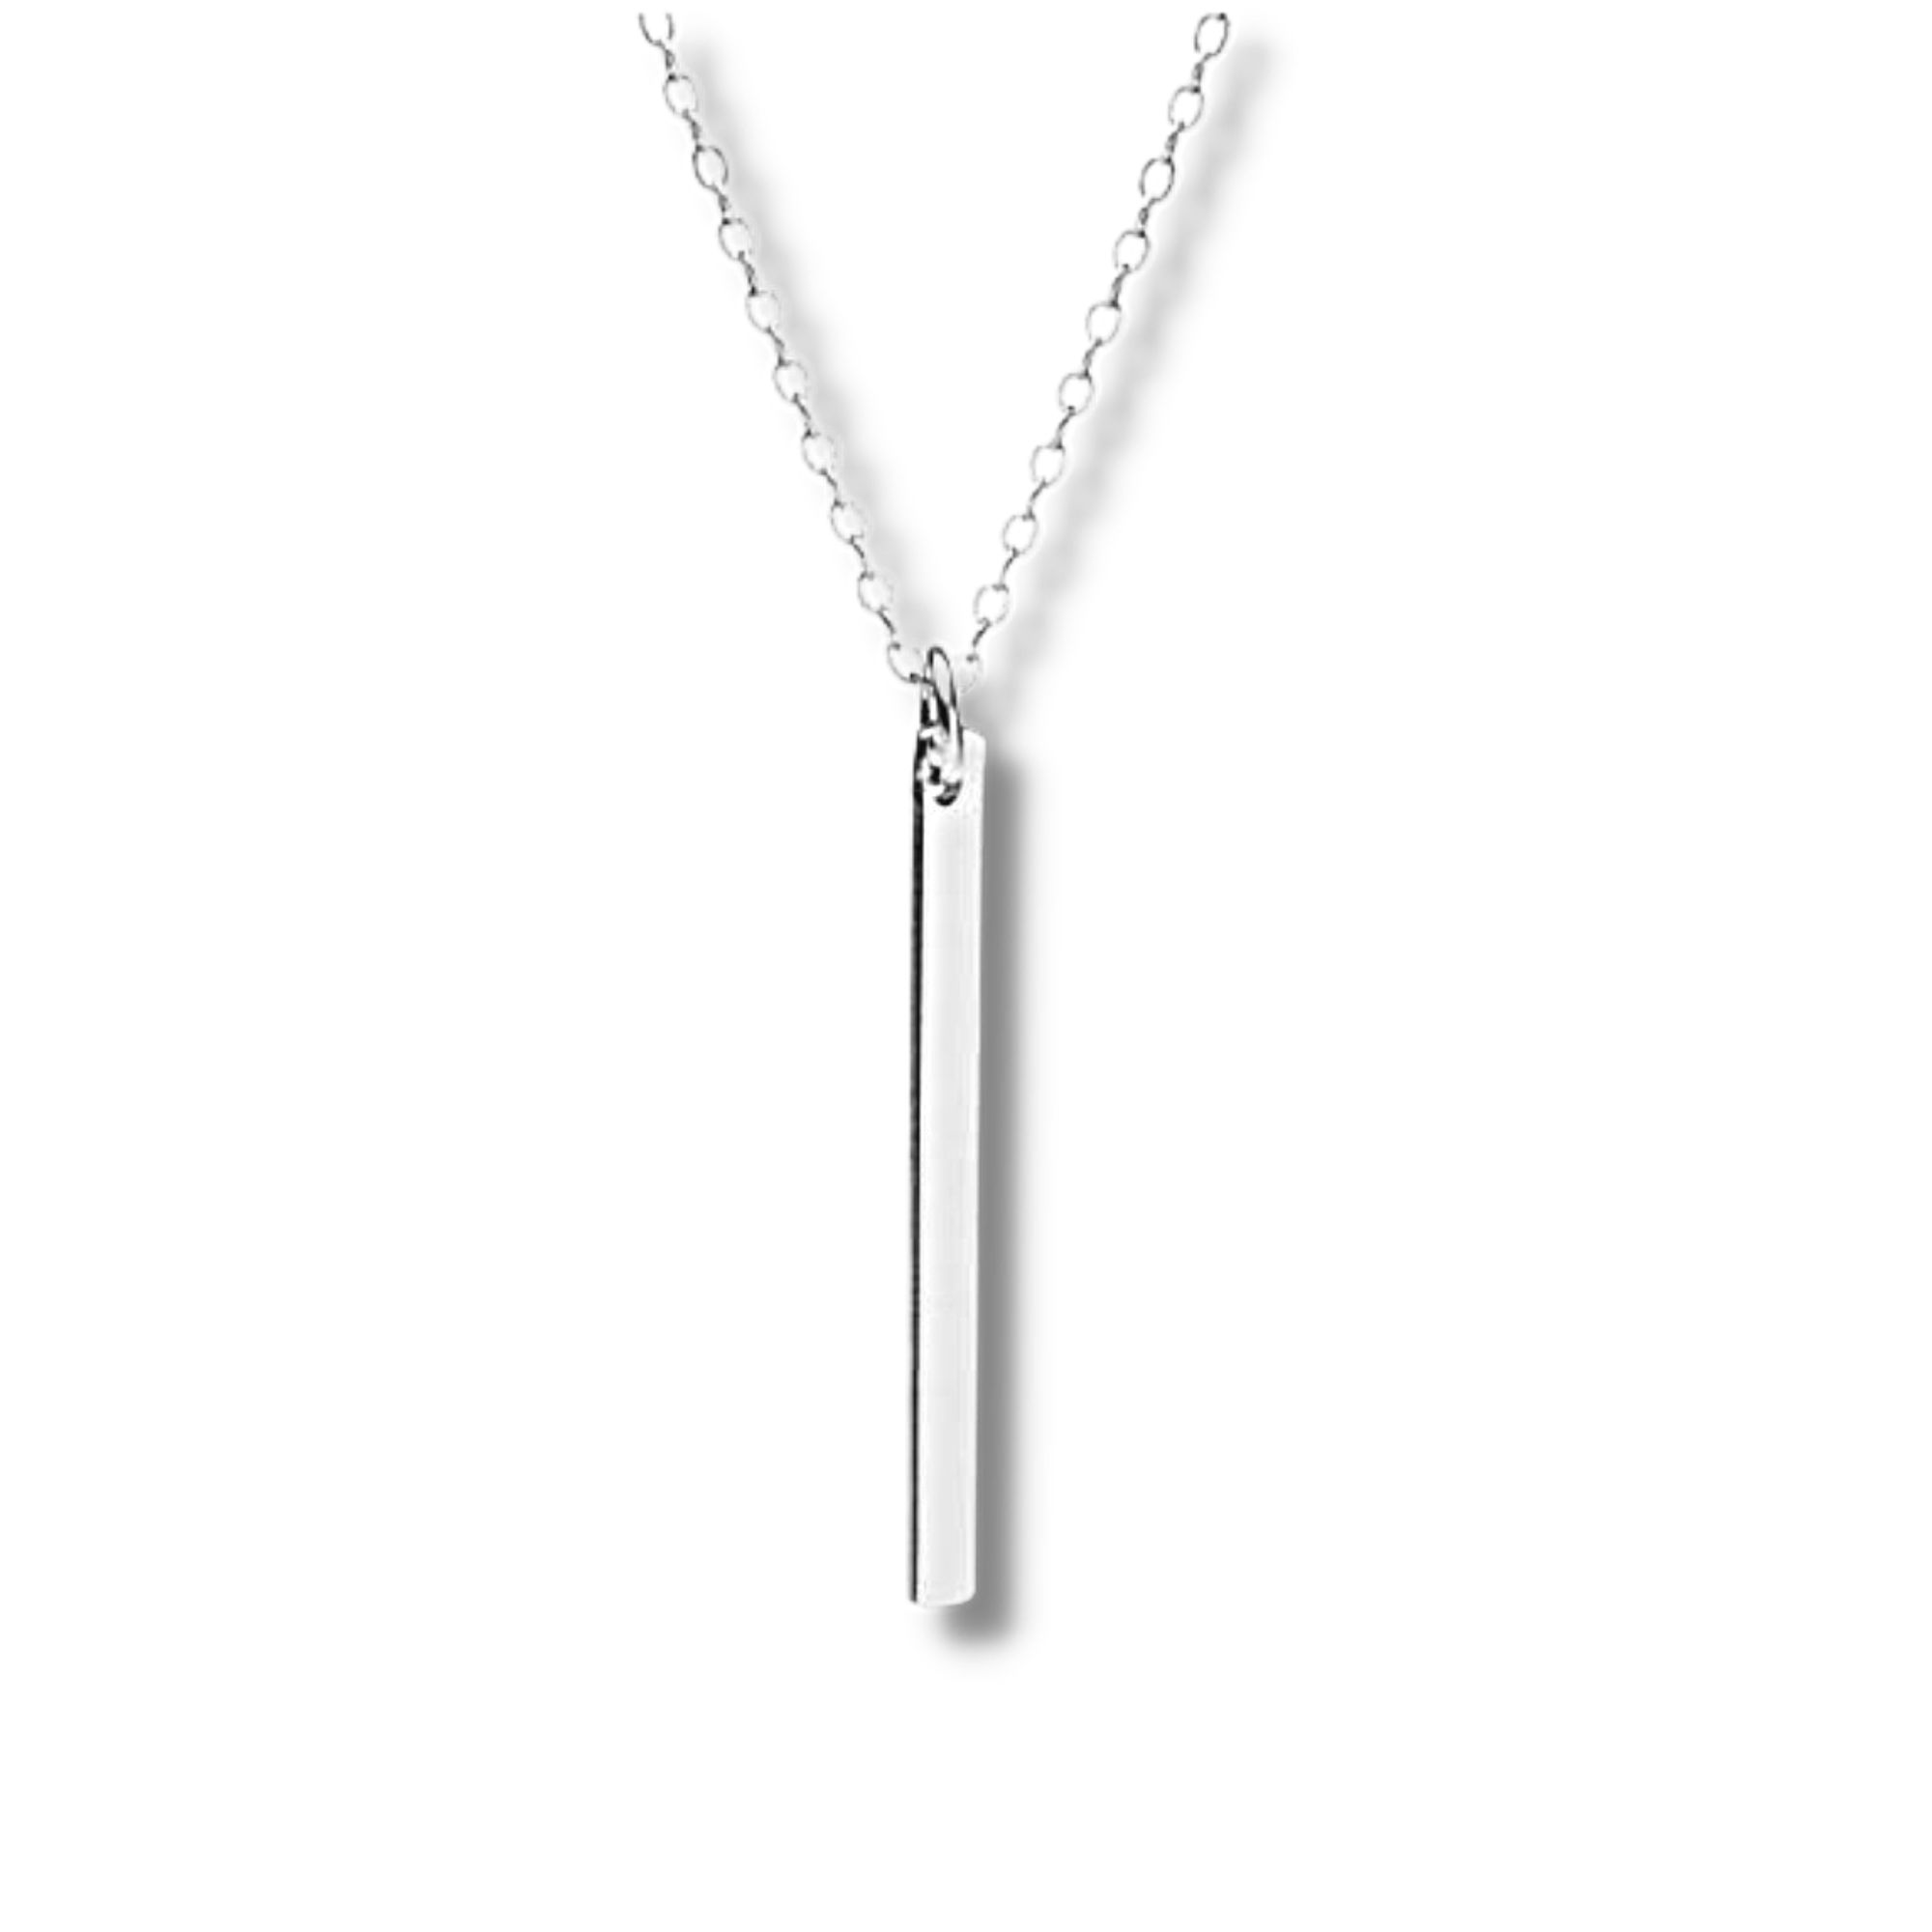 Silver Matchstick Necklace